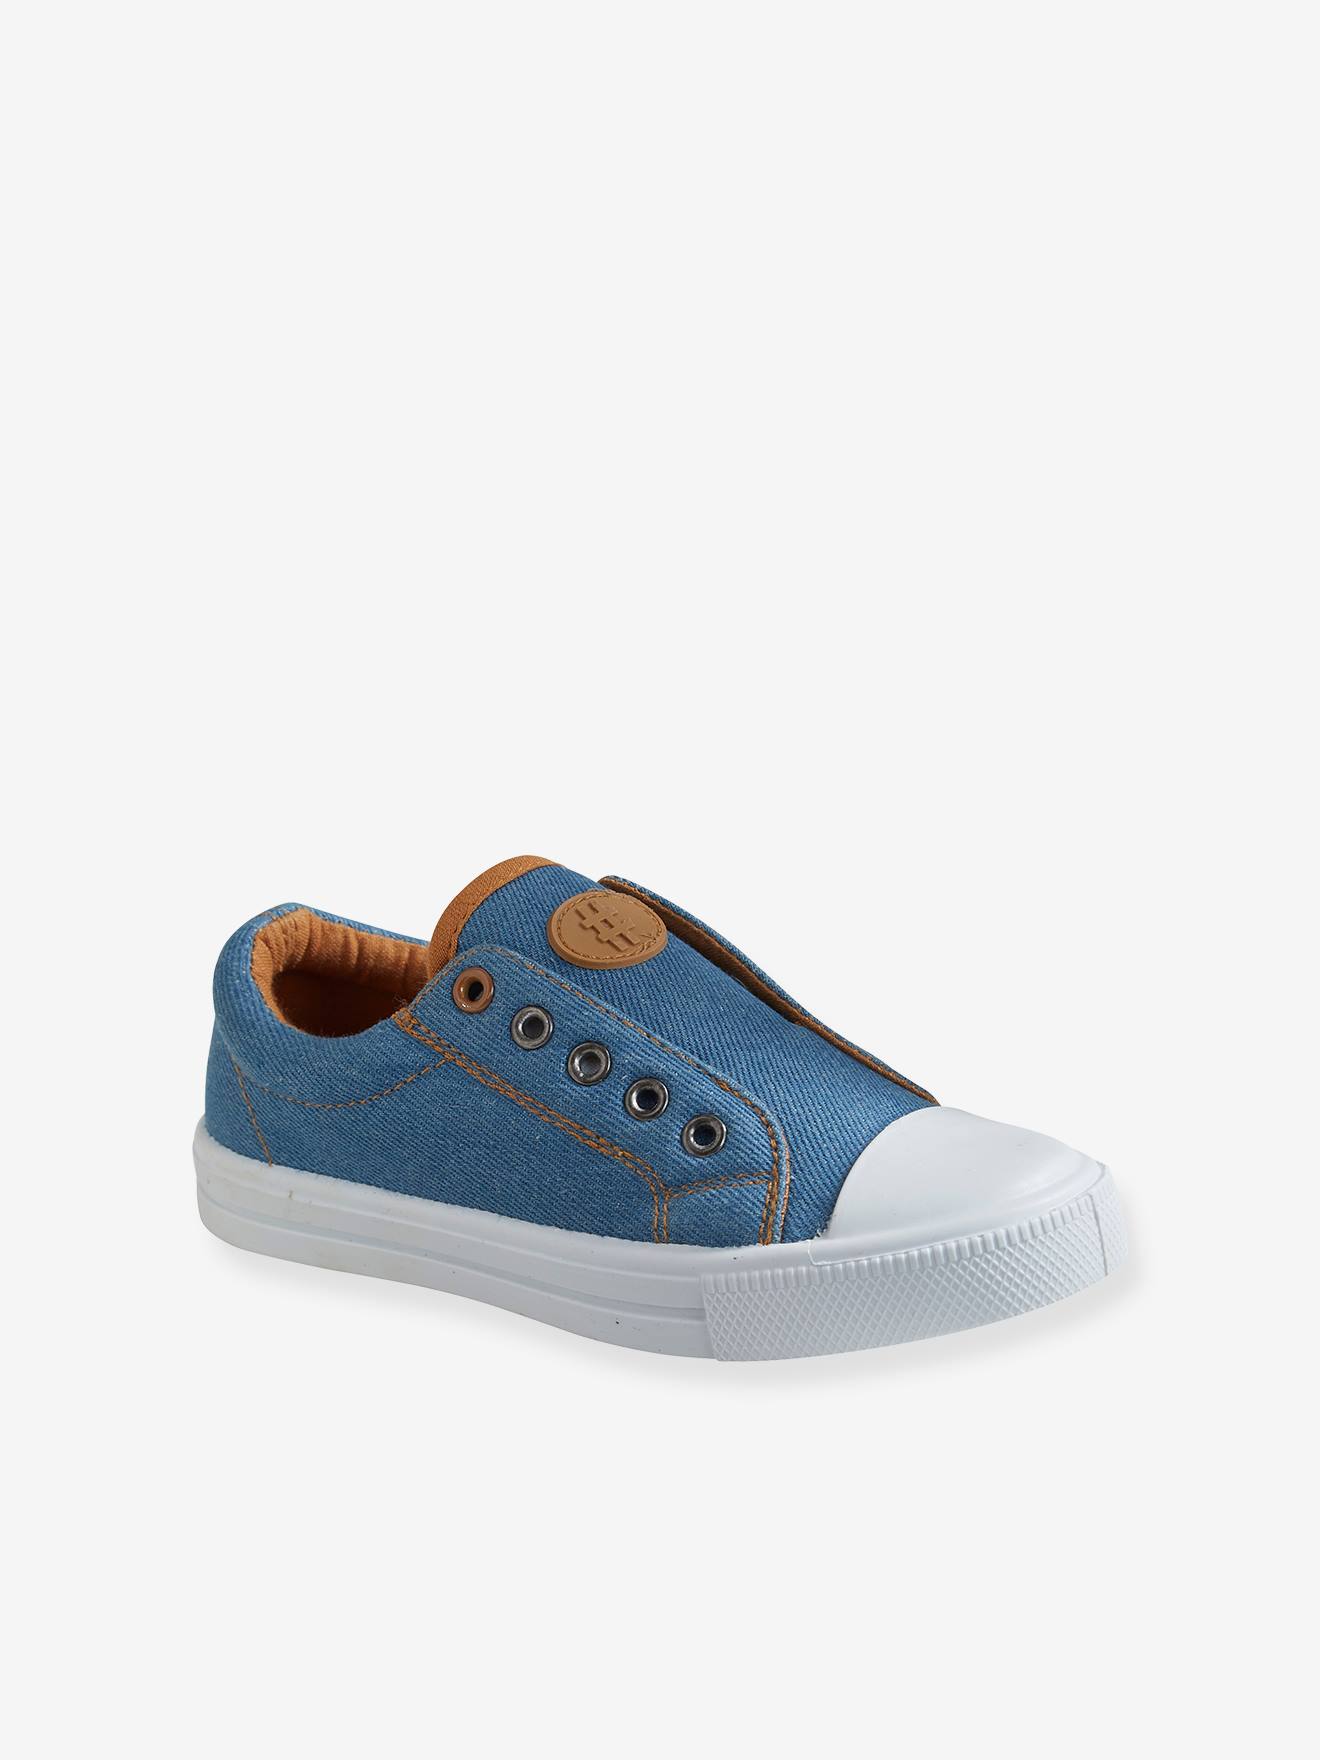 VERTBAUDET Zapatillas elásticas de tela para niño azul medio liso